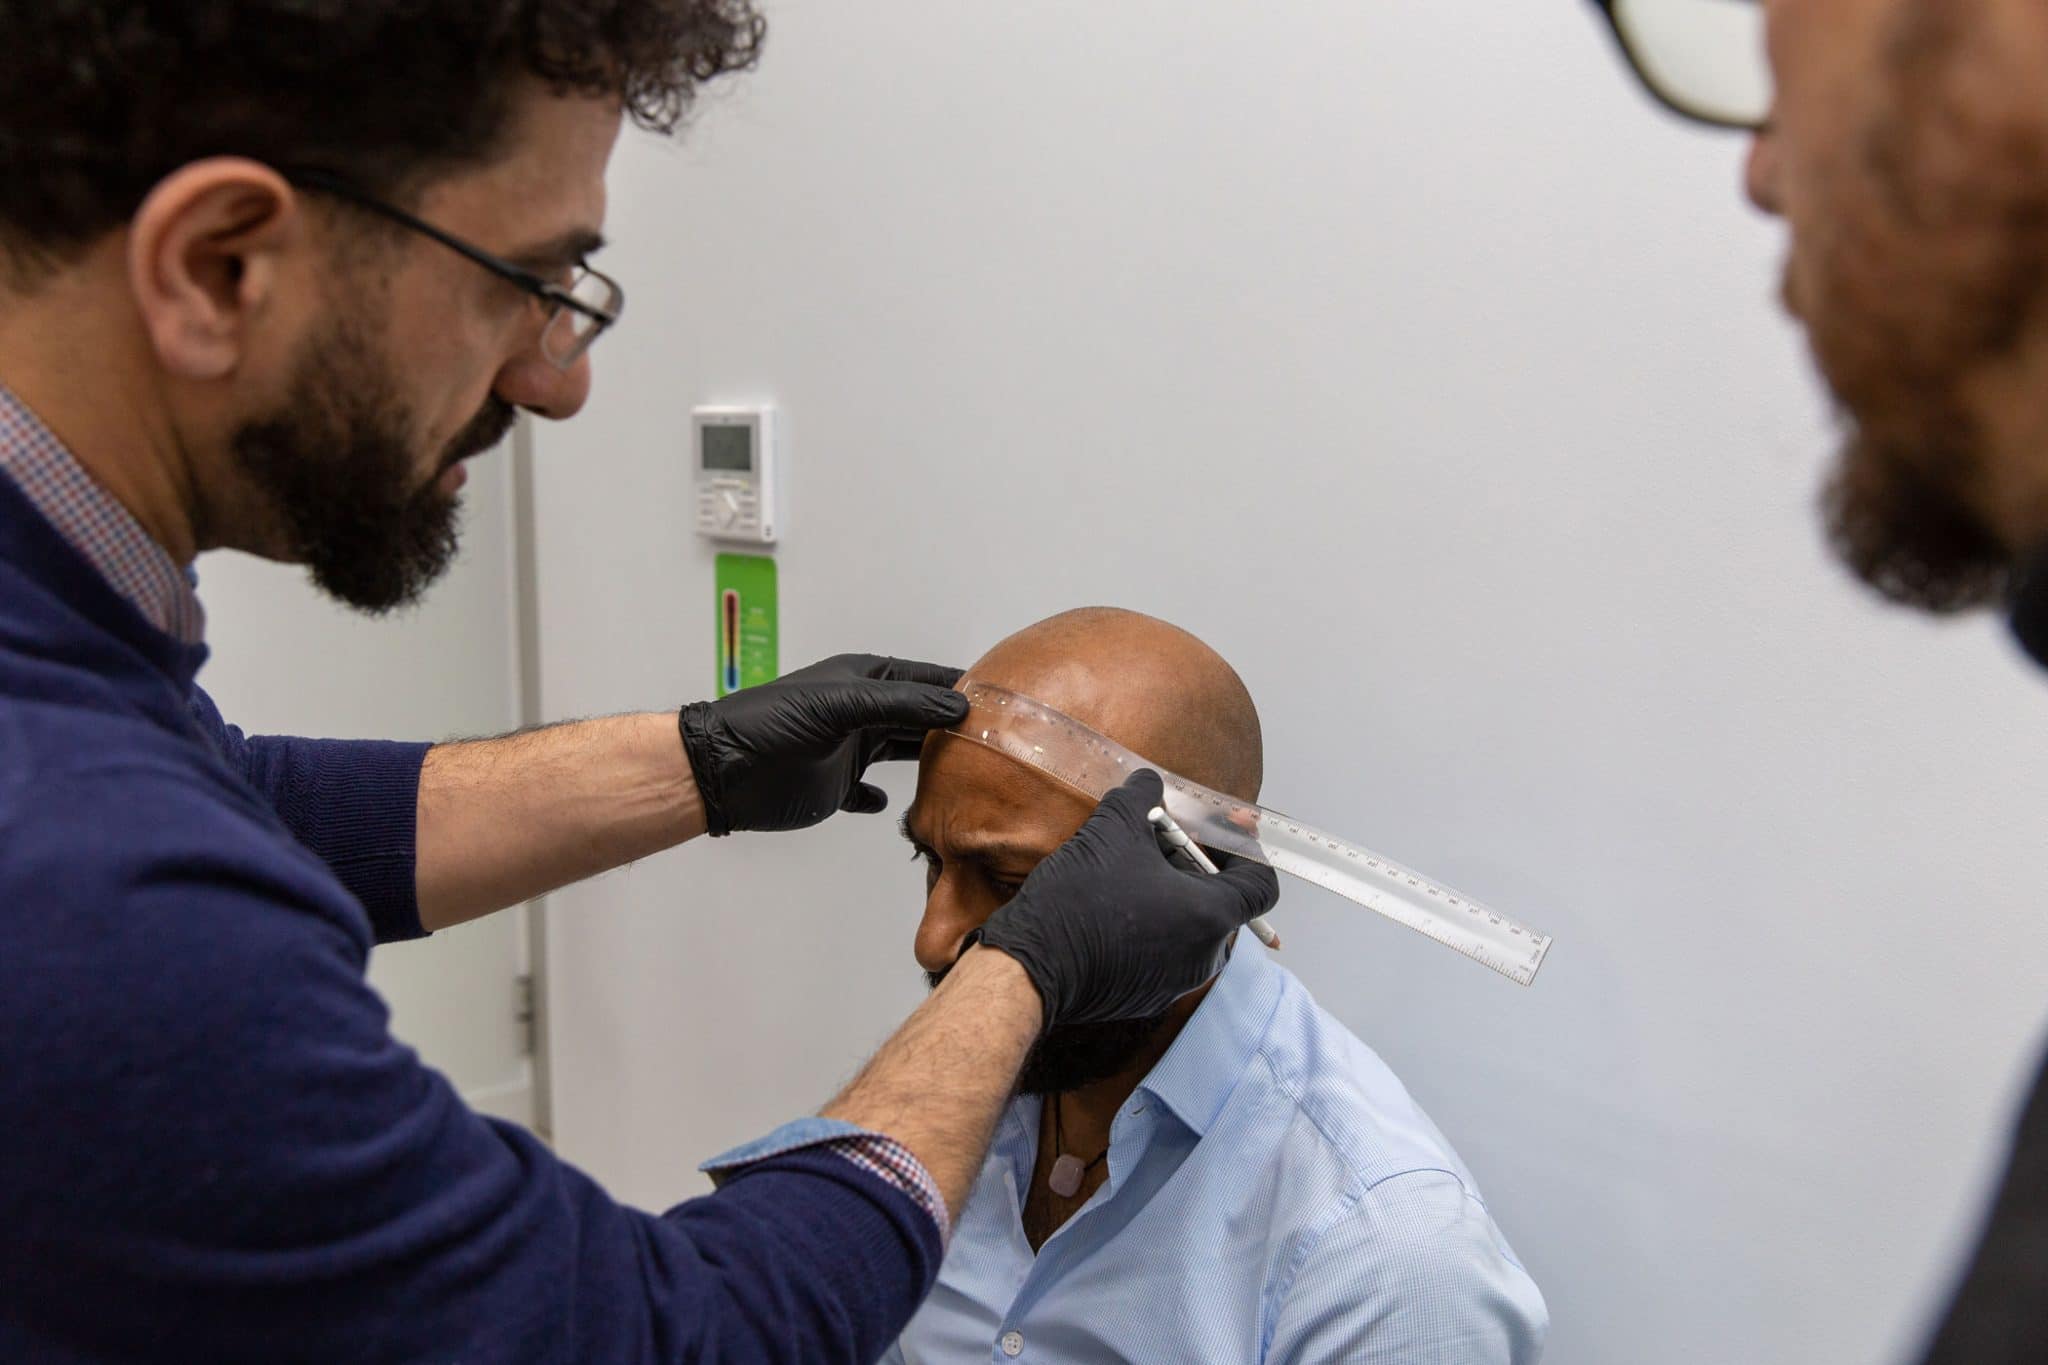 scalp micropigmentation training courses learn-Scalpology